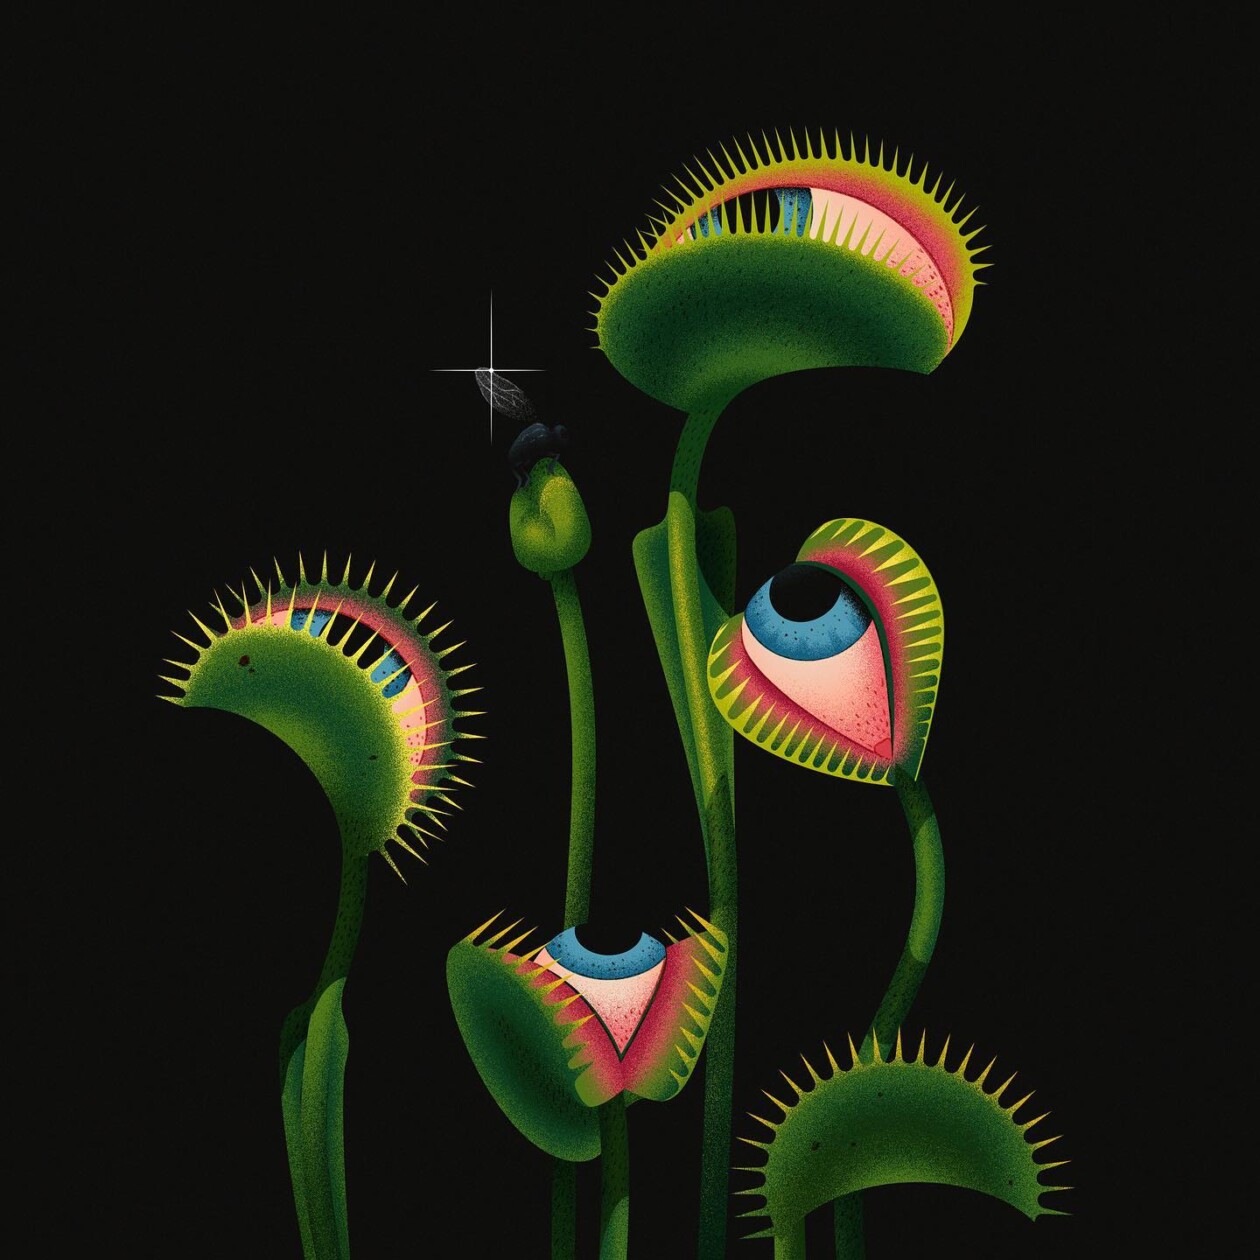 Marvelous Surrealistic Illustrations Of Eyes Peering From Plants And Animals By Ana Miminoshvili (5)